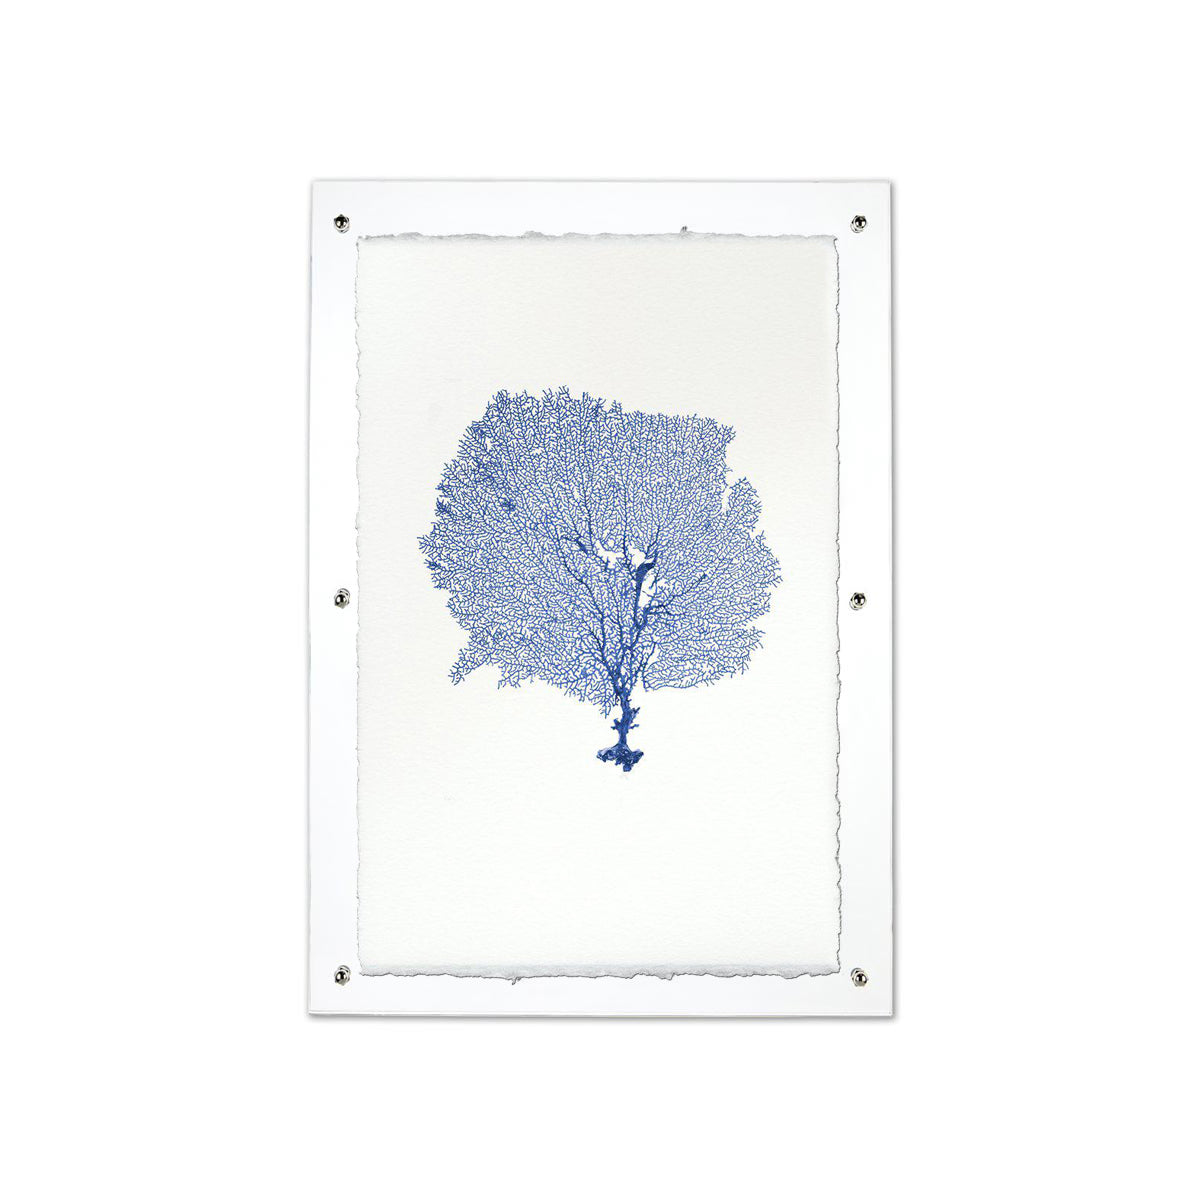 Round Sea fan blue framed handmade paper wall art print 20"x30"